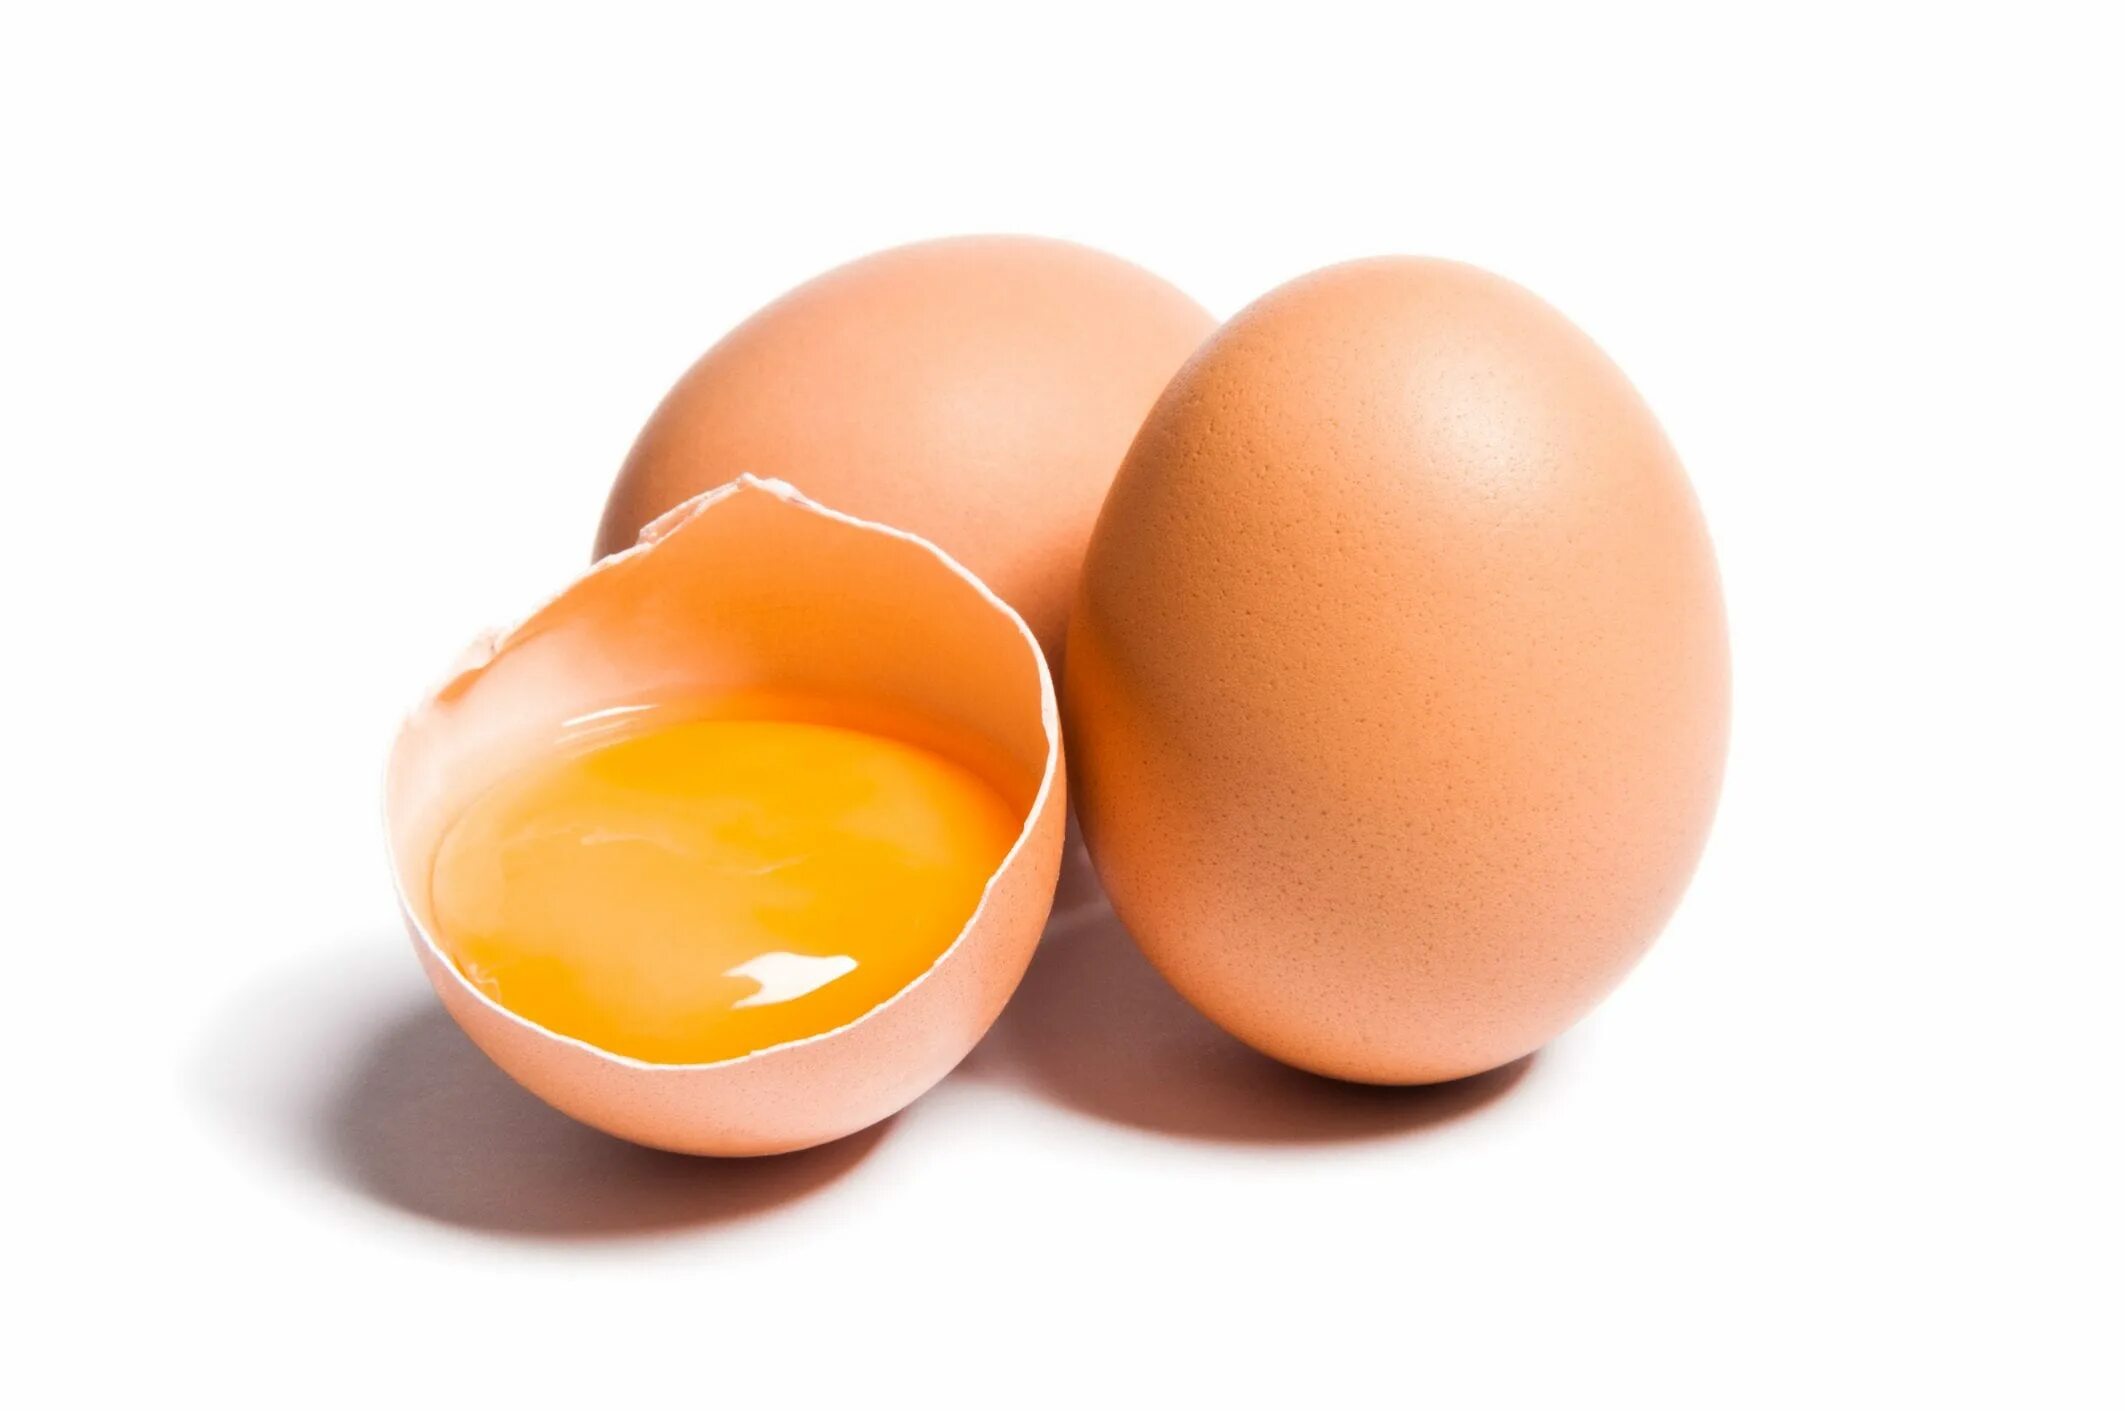 Яйцо куриное. Яйцо без фона. Яйцо домашнее куриное. Яйцо (пищевой продукт). All eggs in sols rng